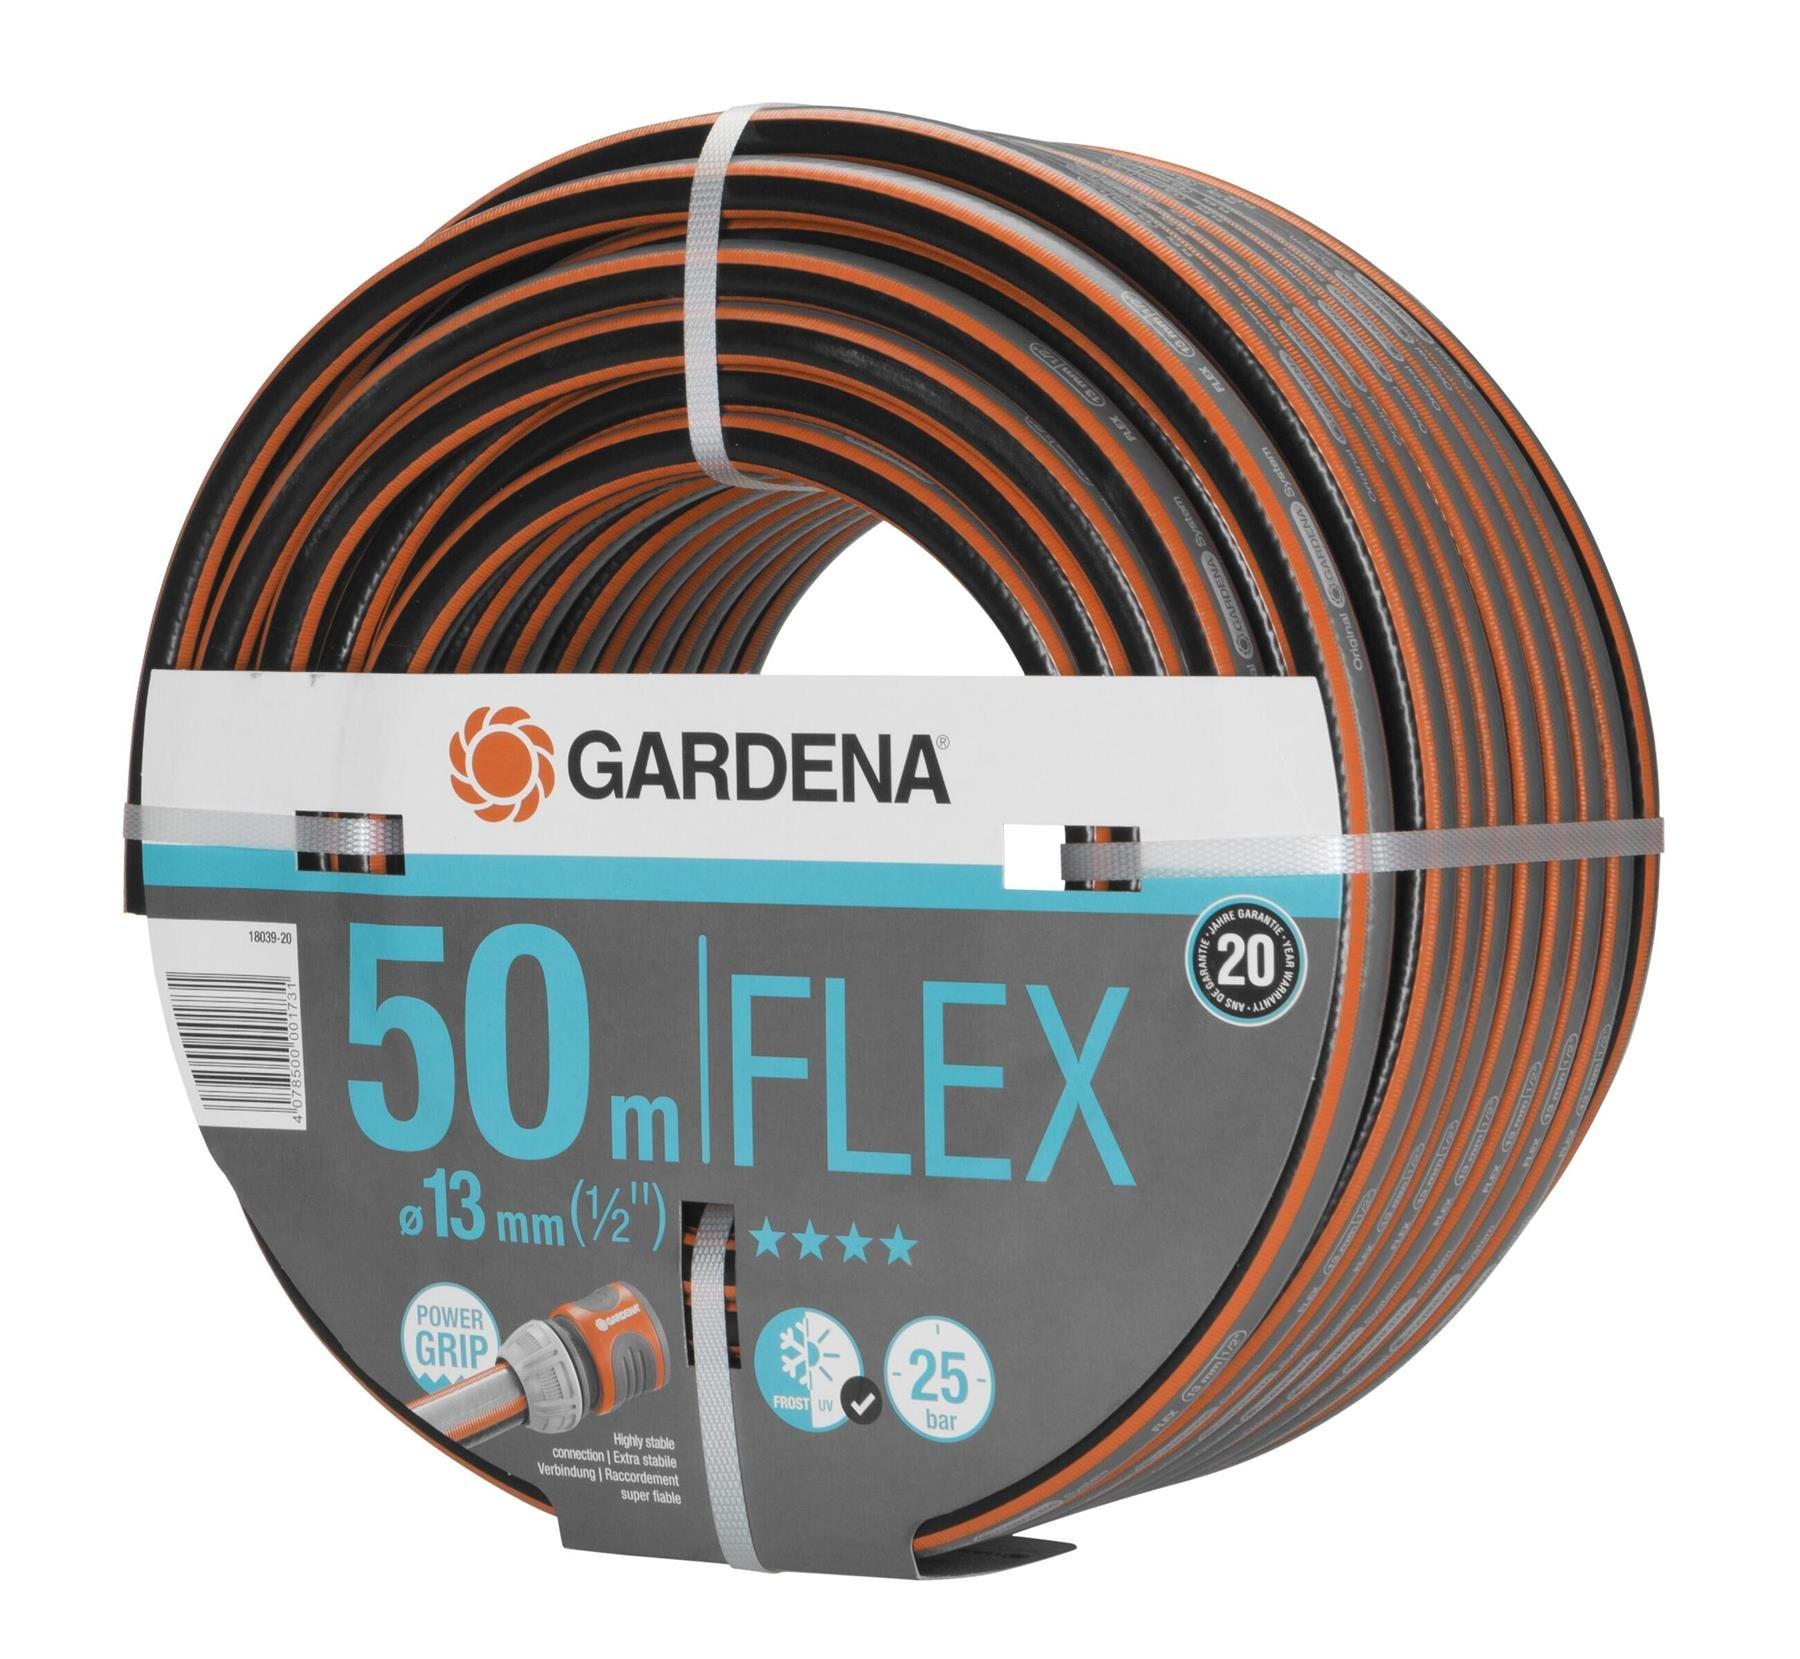 GARDENA Comfort FLEX Garden Hose - 50 m